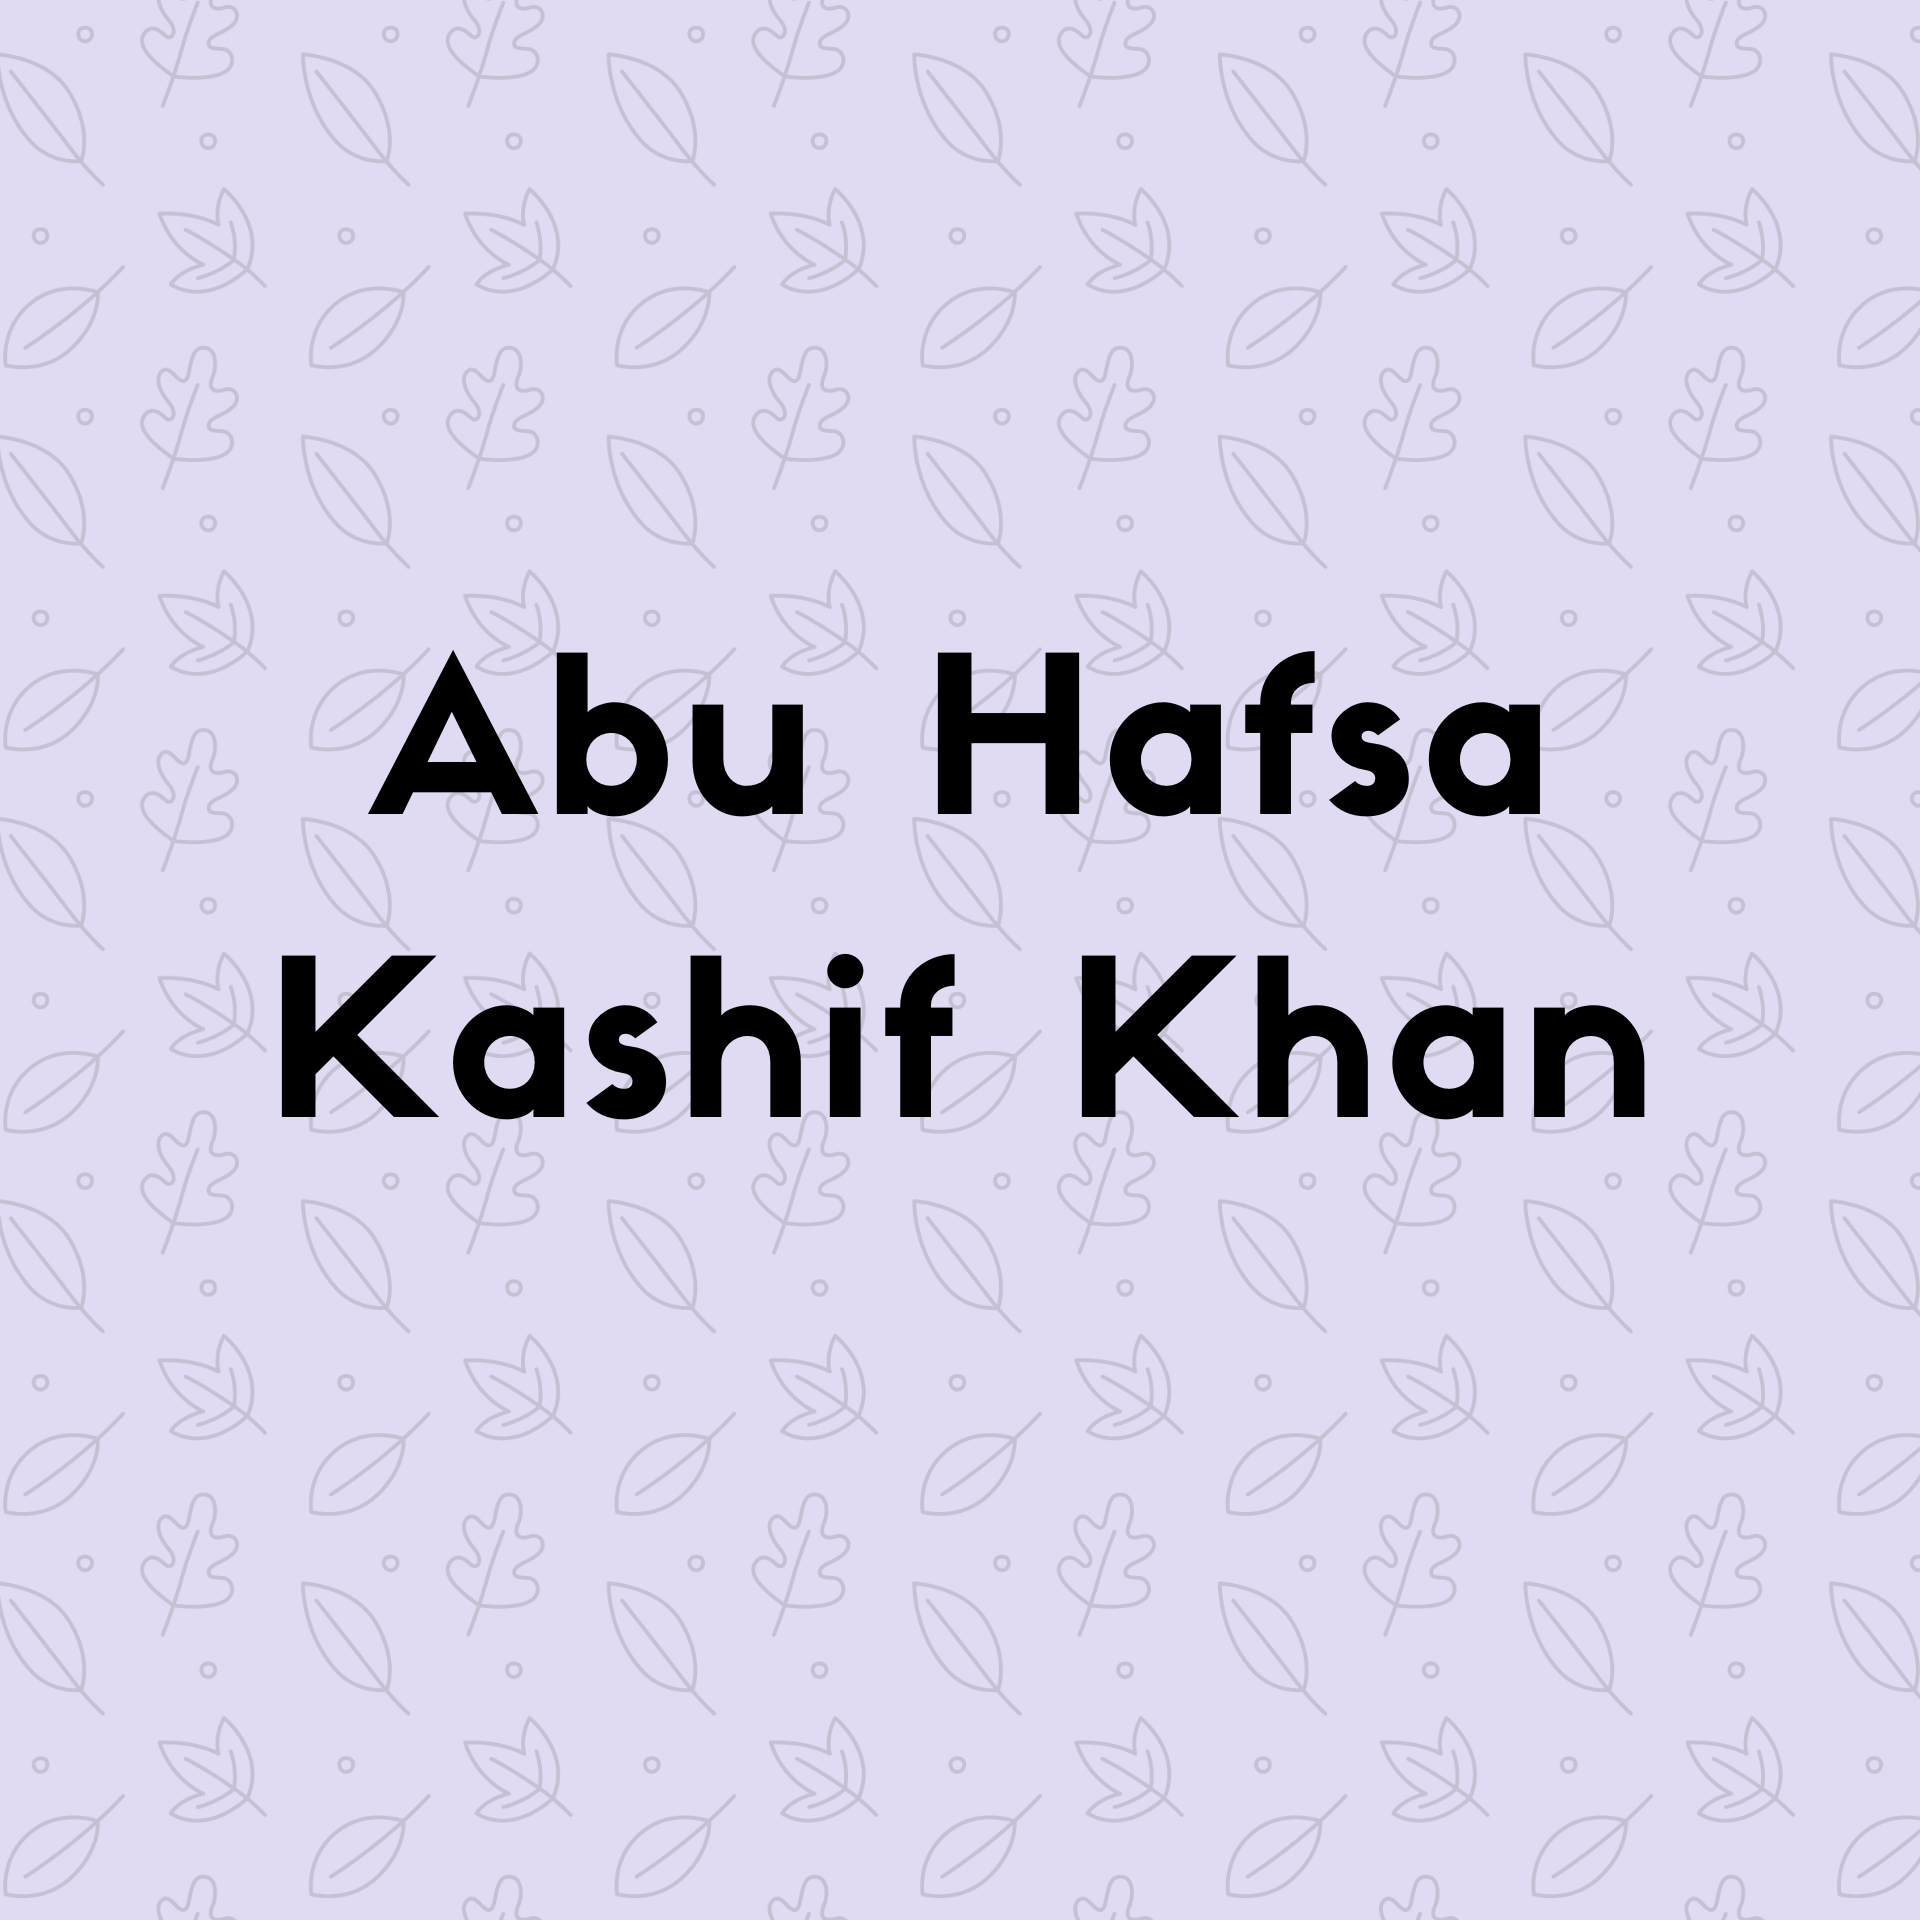  Abu Hafsa Kashif Khan